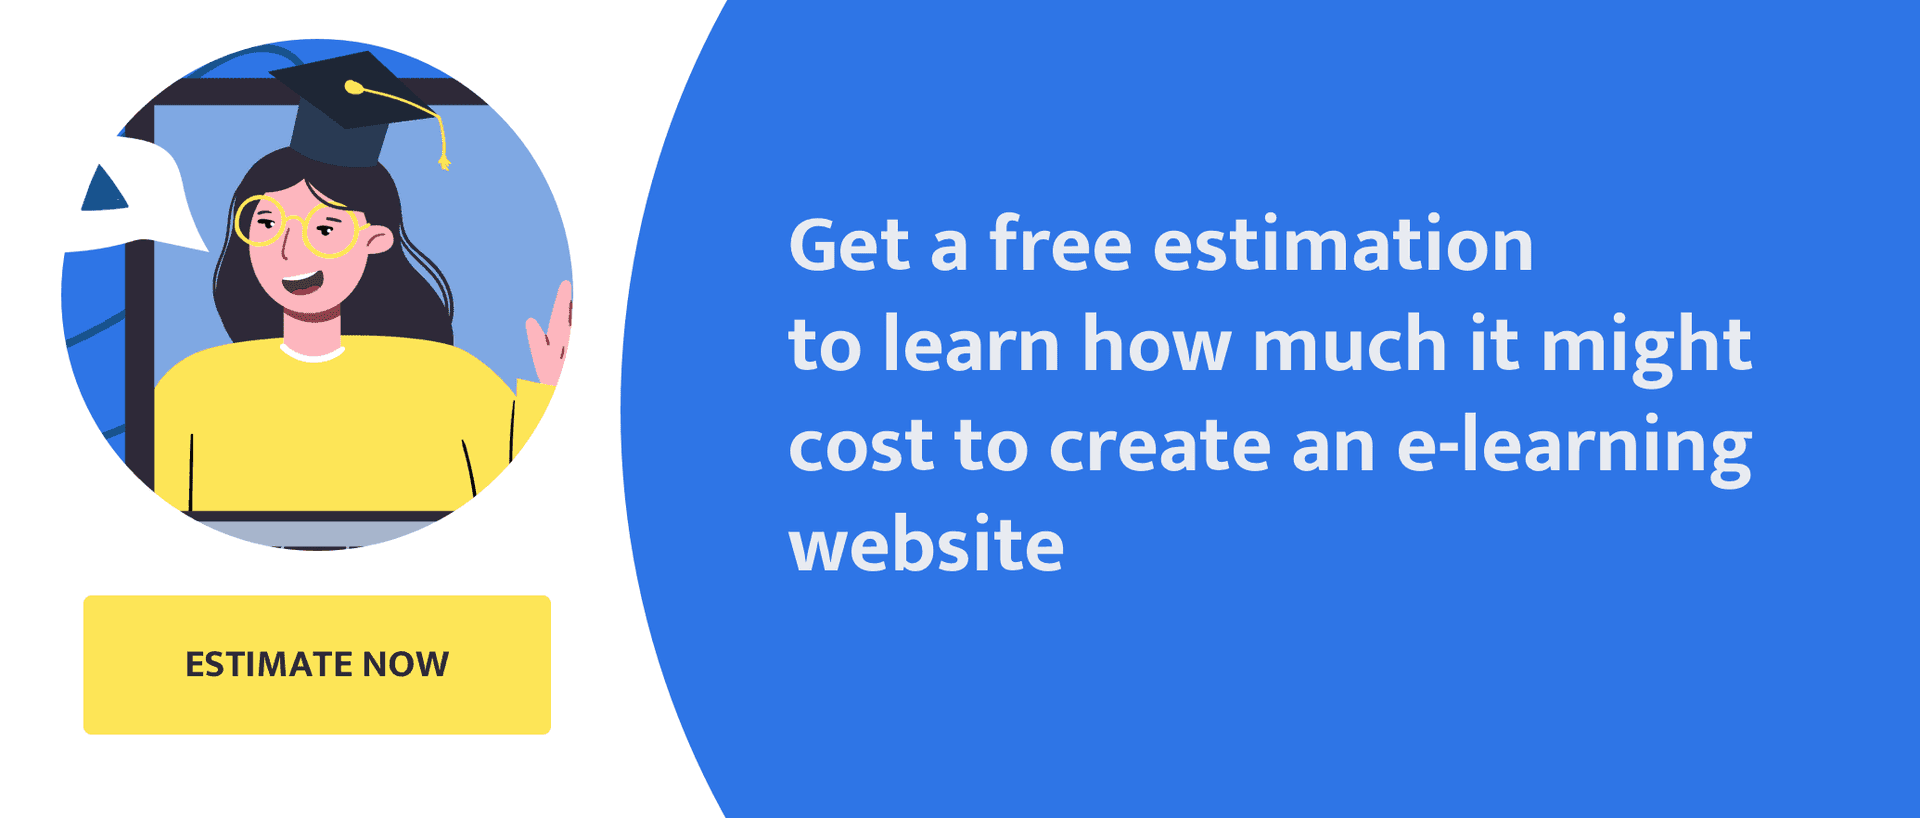 create an e-learning website 	